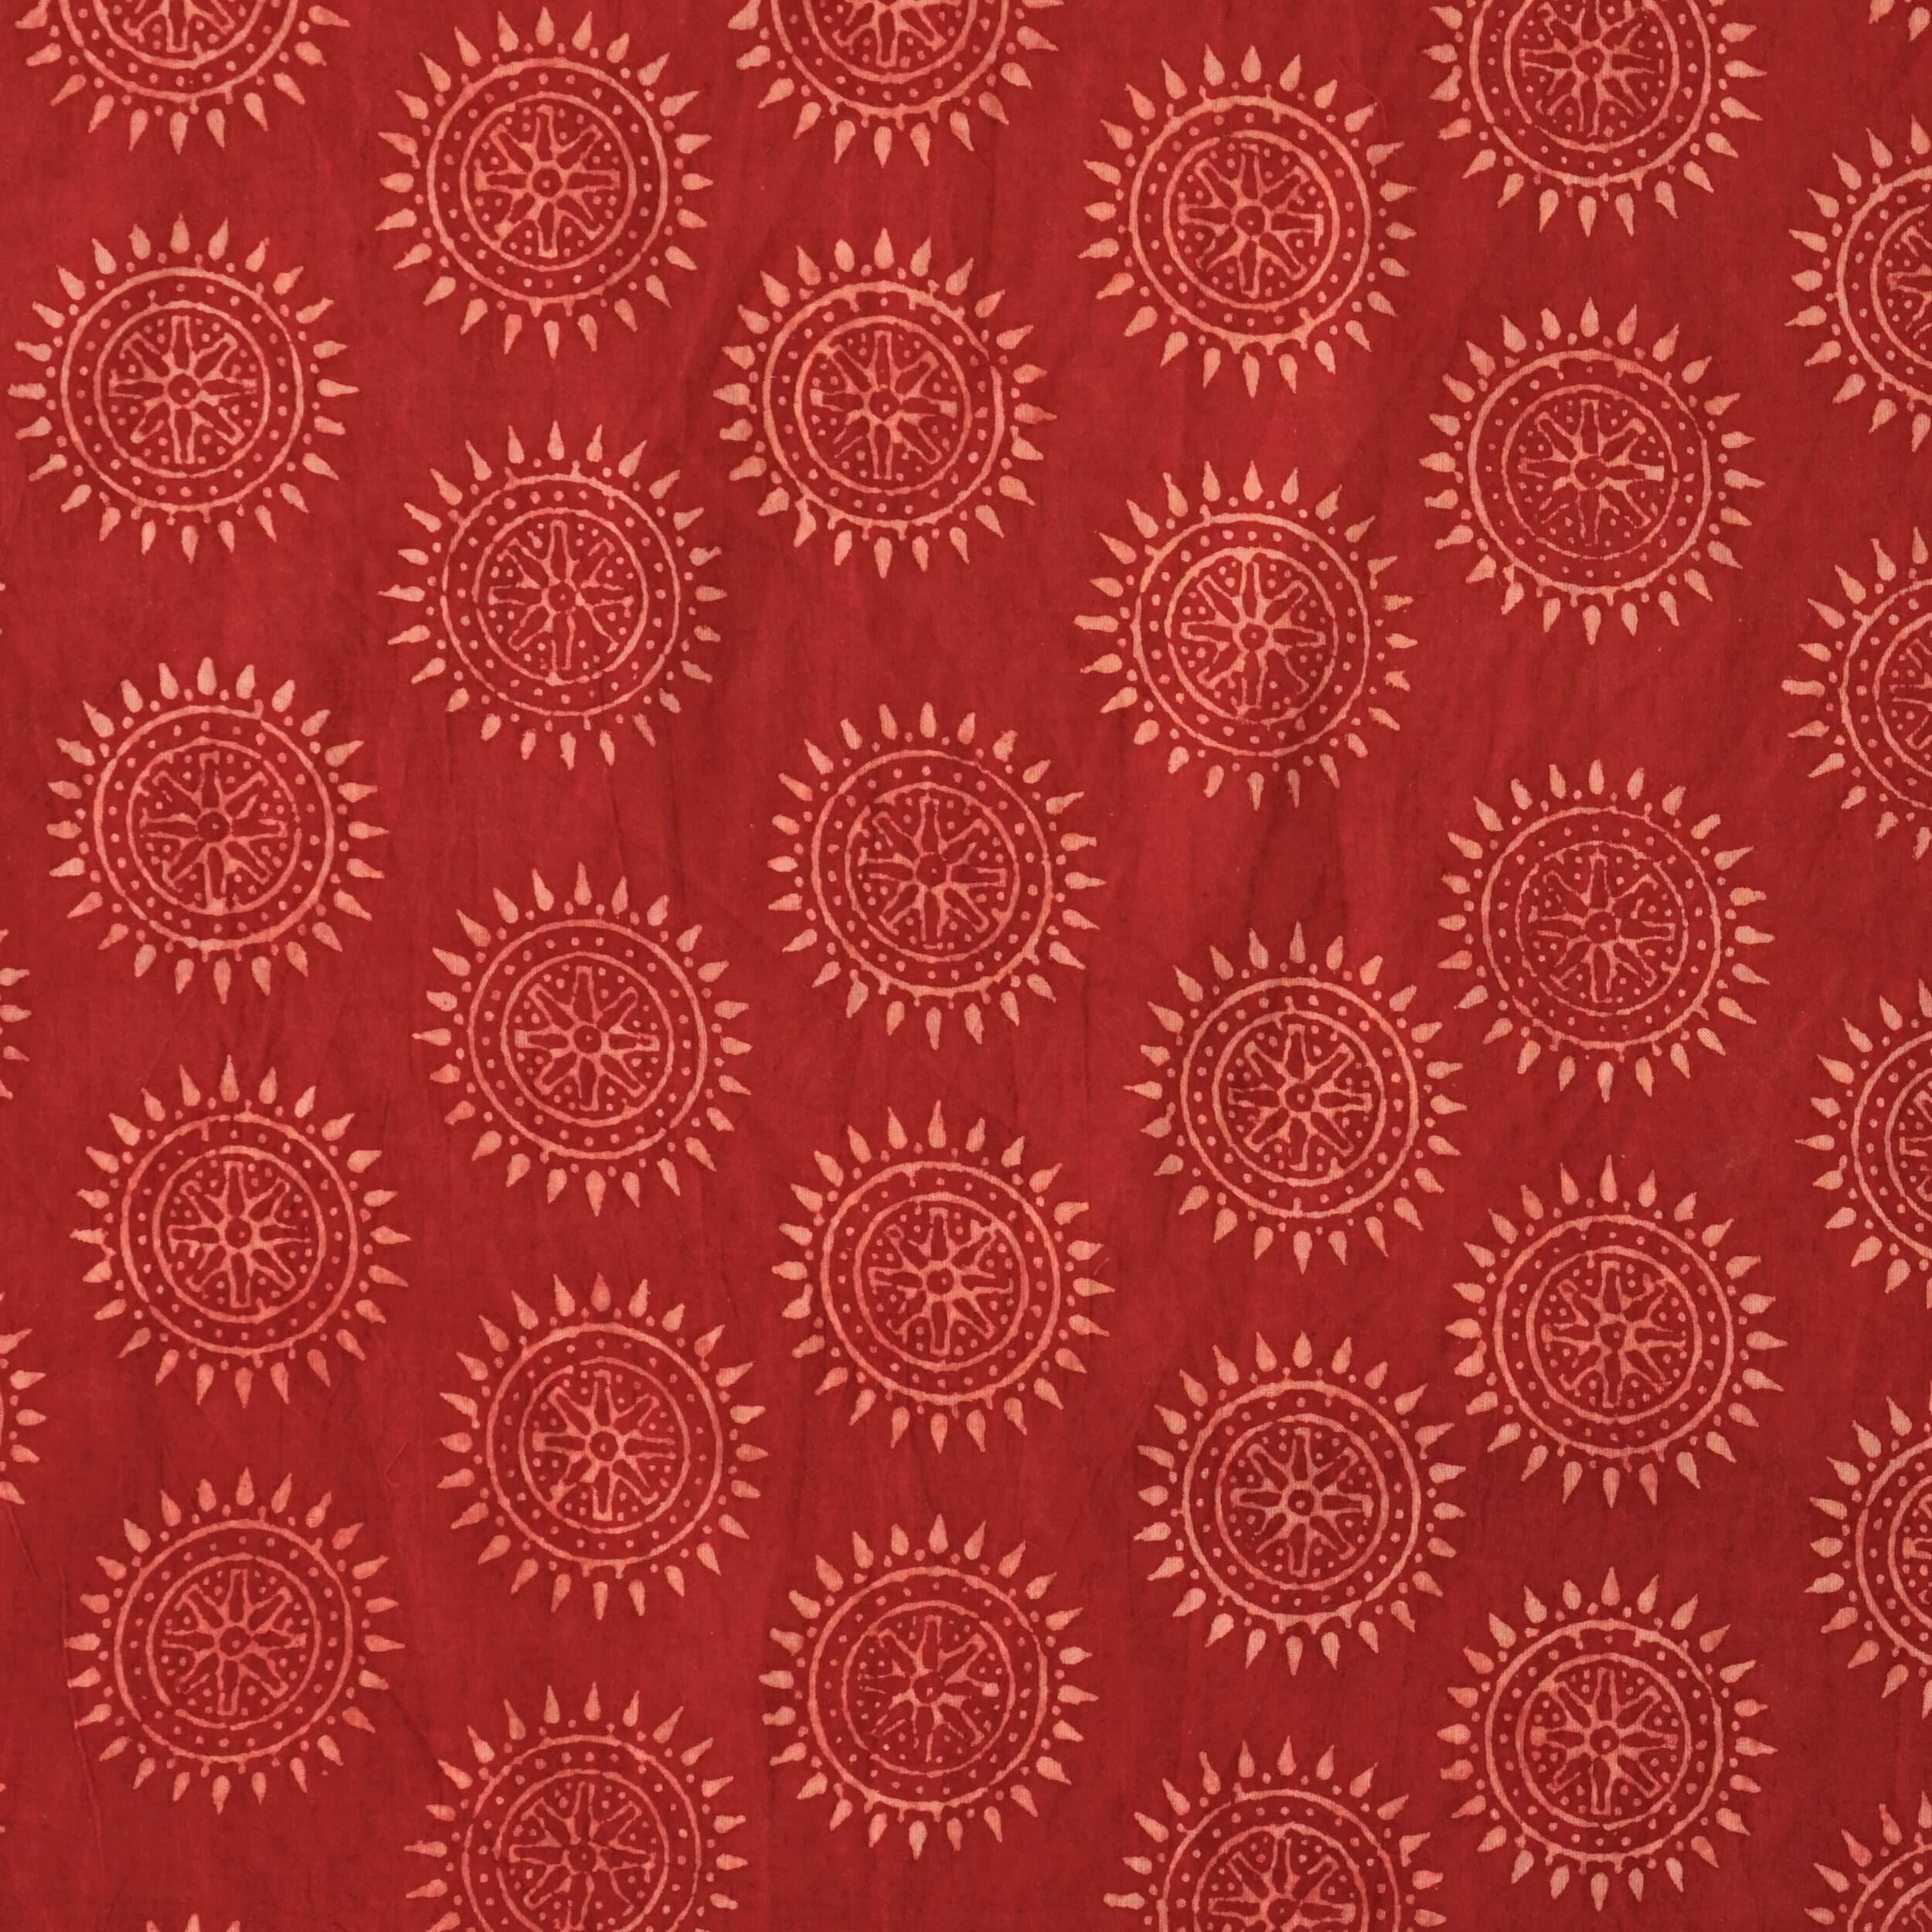 2 - AHM52 - Block-Printed Cotton Fabric - Alizarin Dye - Red - Troubadour Design - Flat